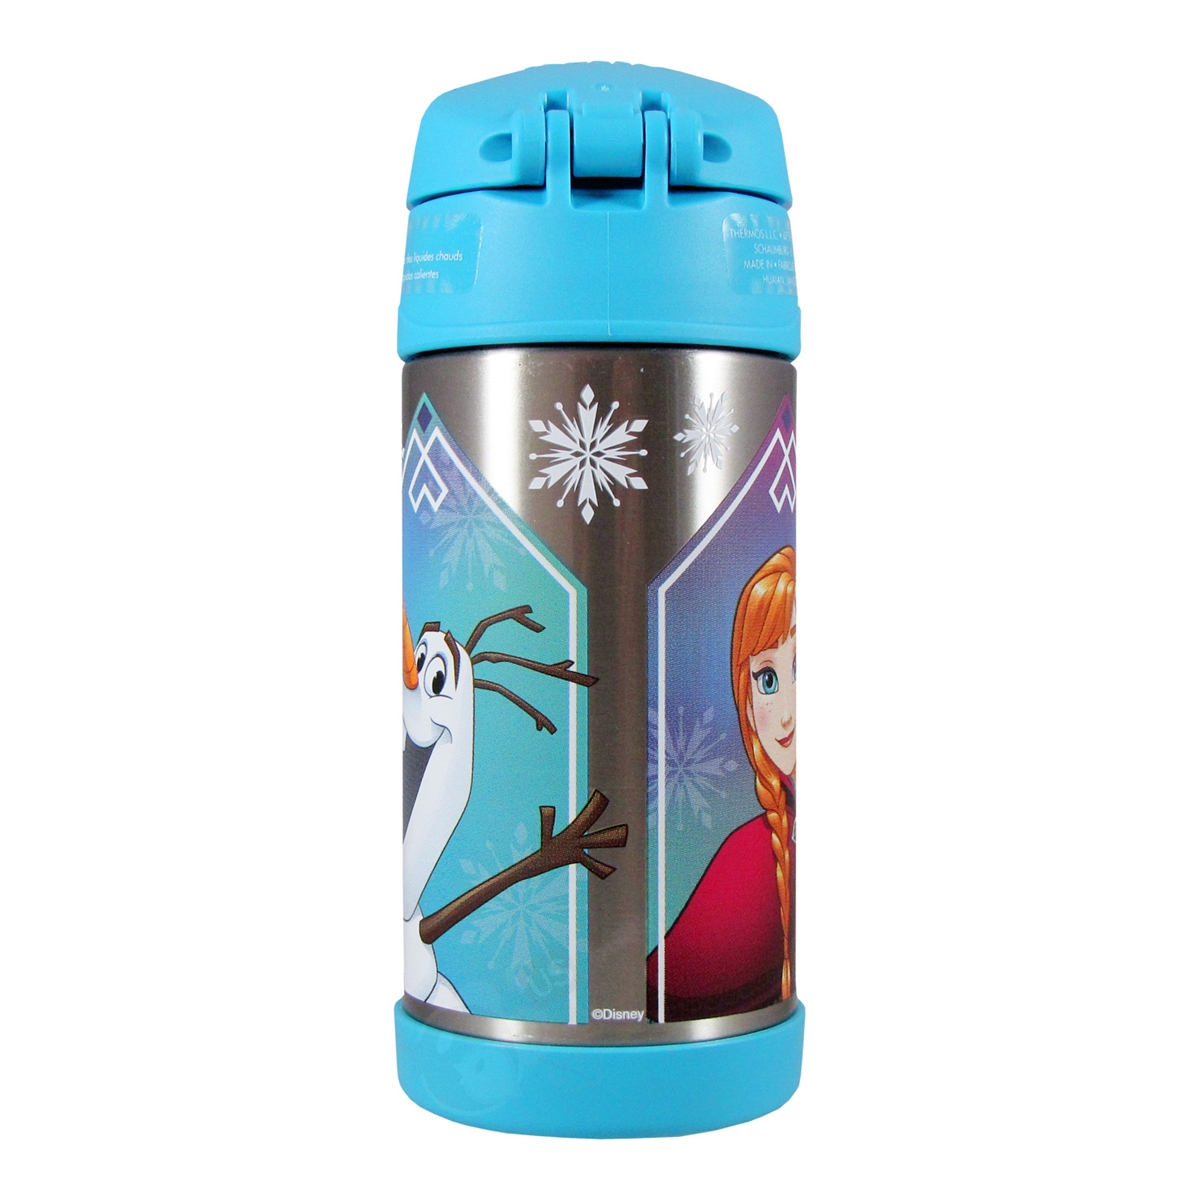 FUNtainer Bottle featuring Disney Frozen Ana & Elsa - 12 oz. (Thermos)